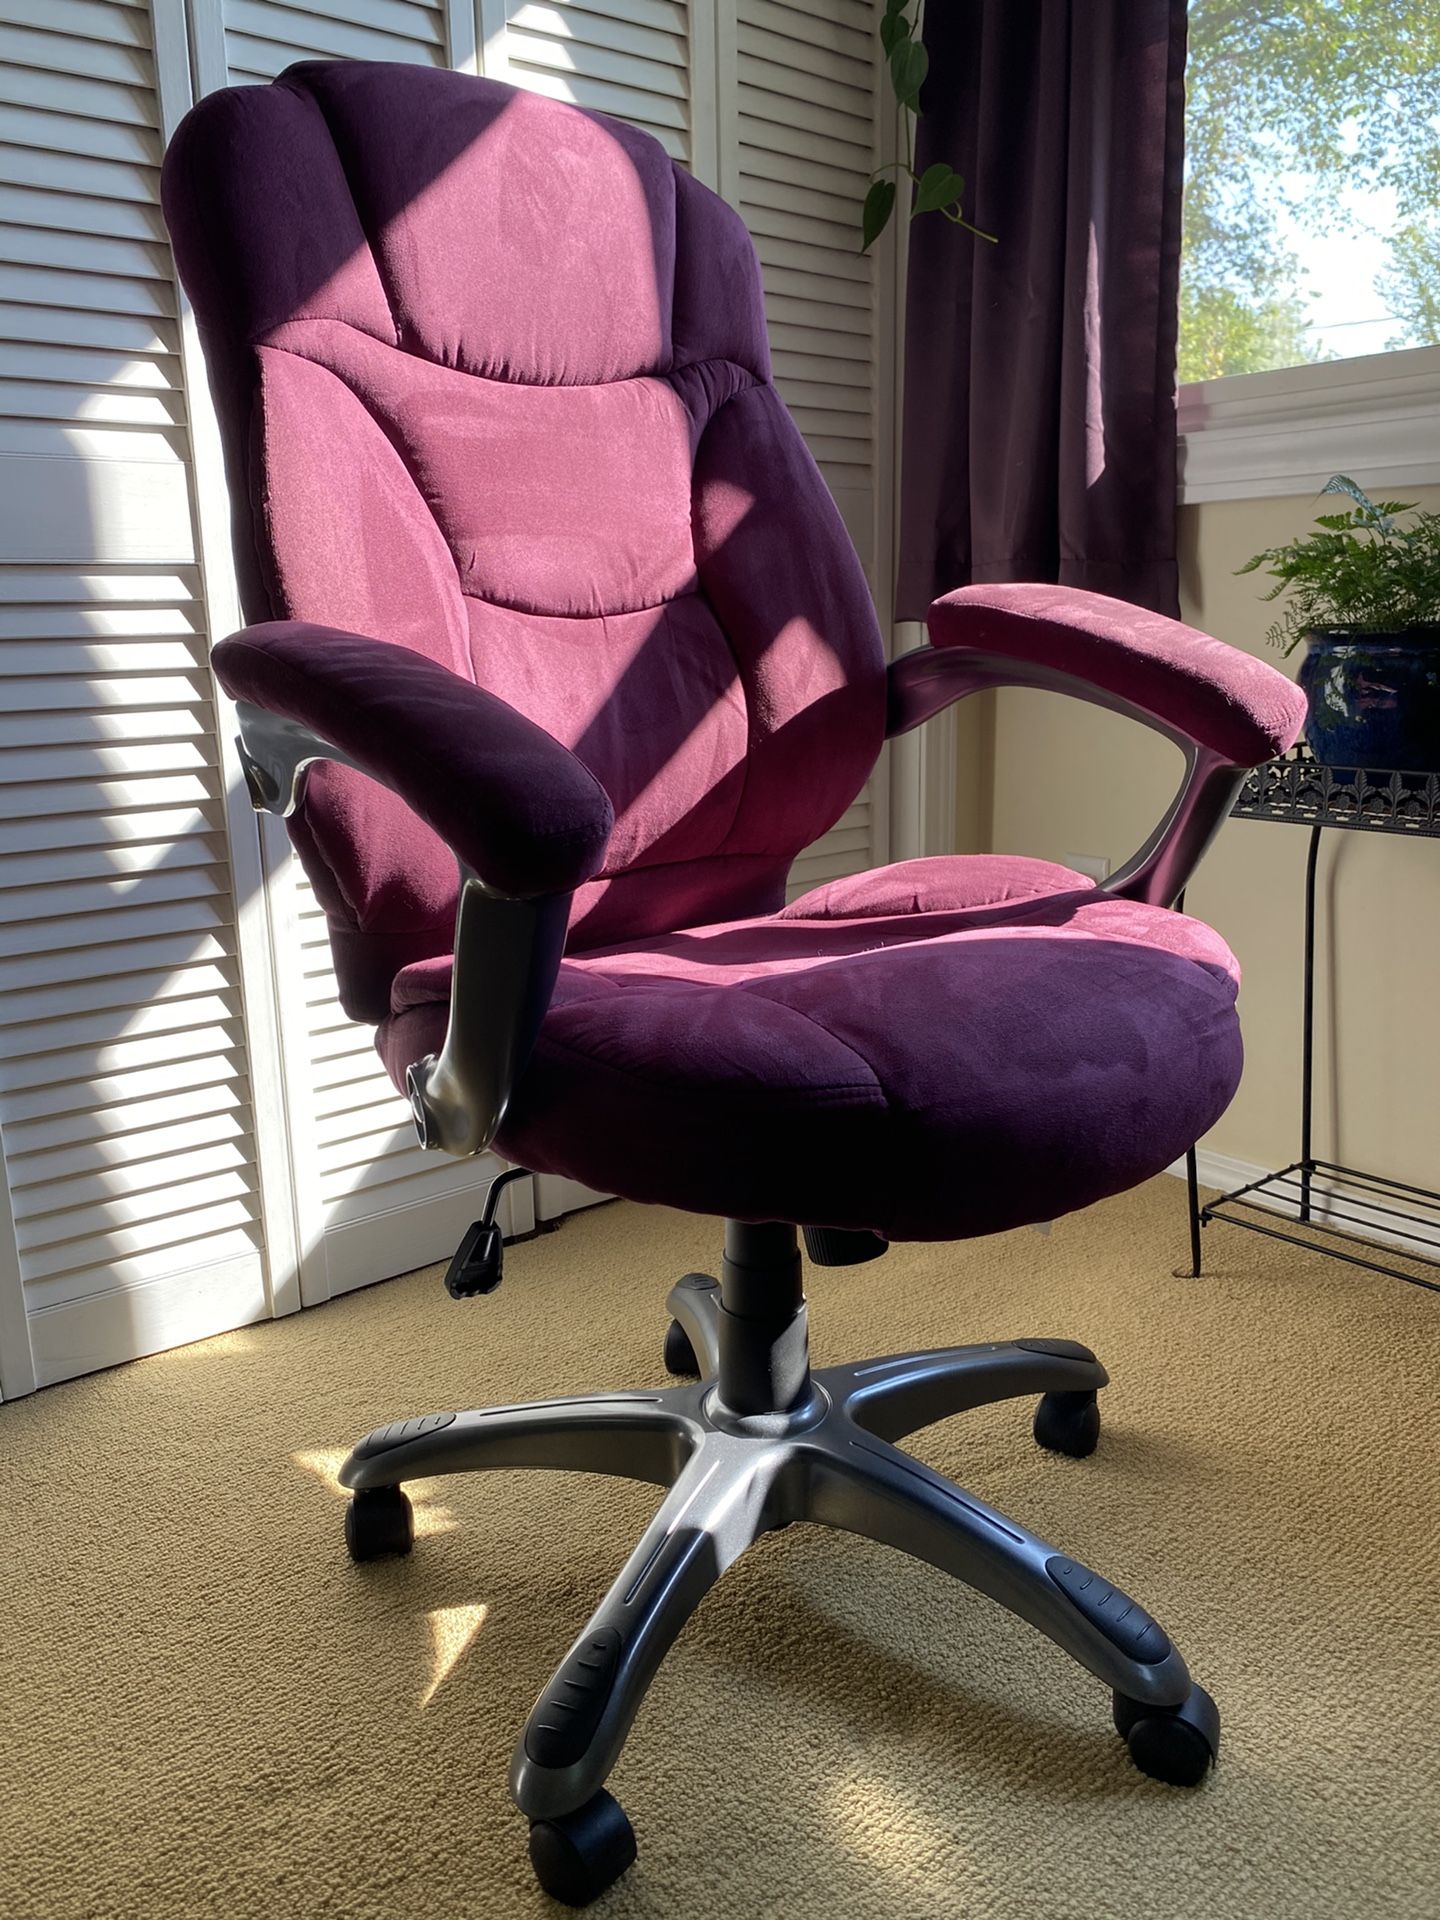 Purple Desk Chair